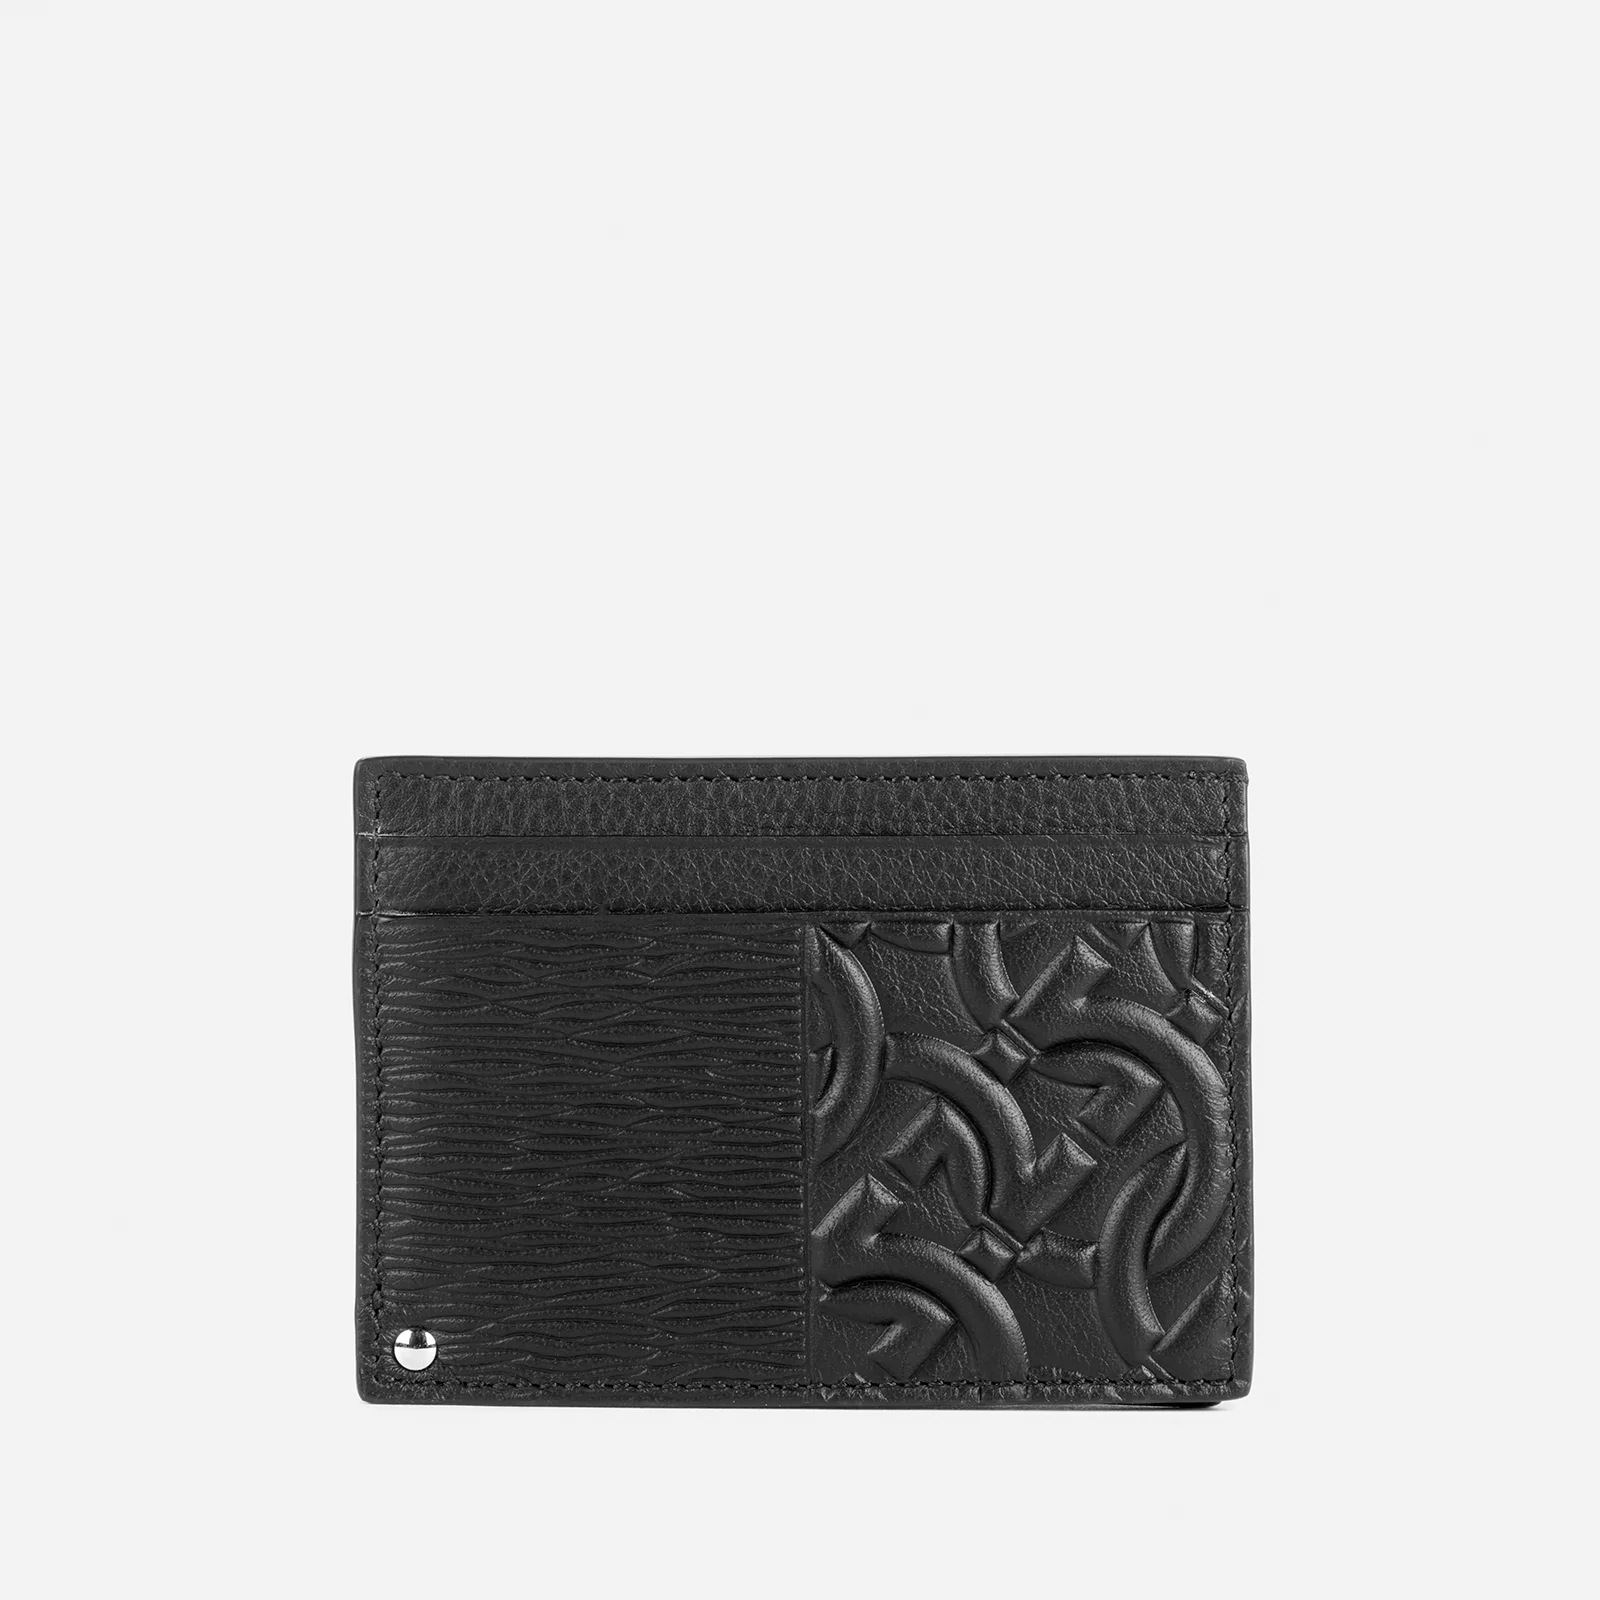 Ferragamo Men's Mixed Embossed Credit Card Holder - Black Image 1